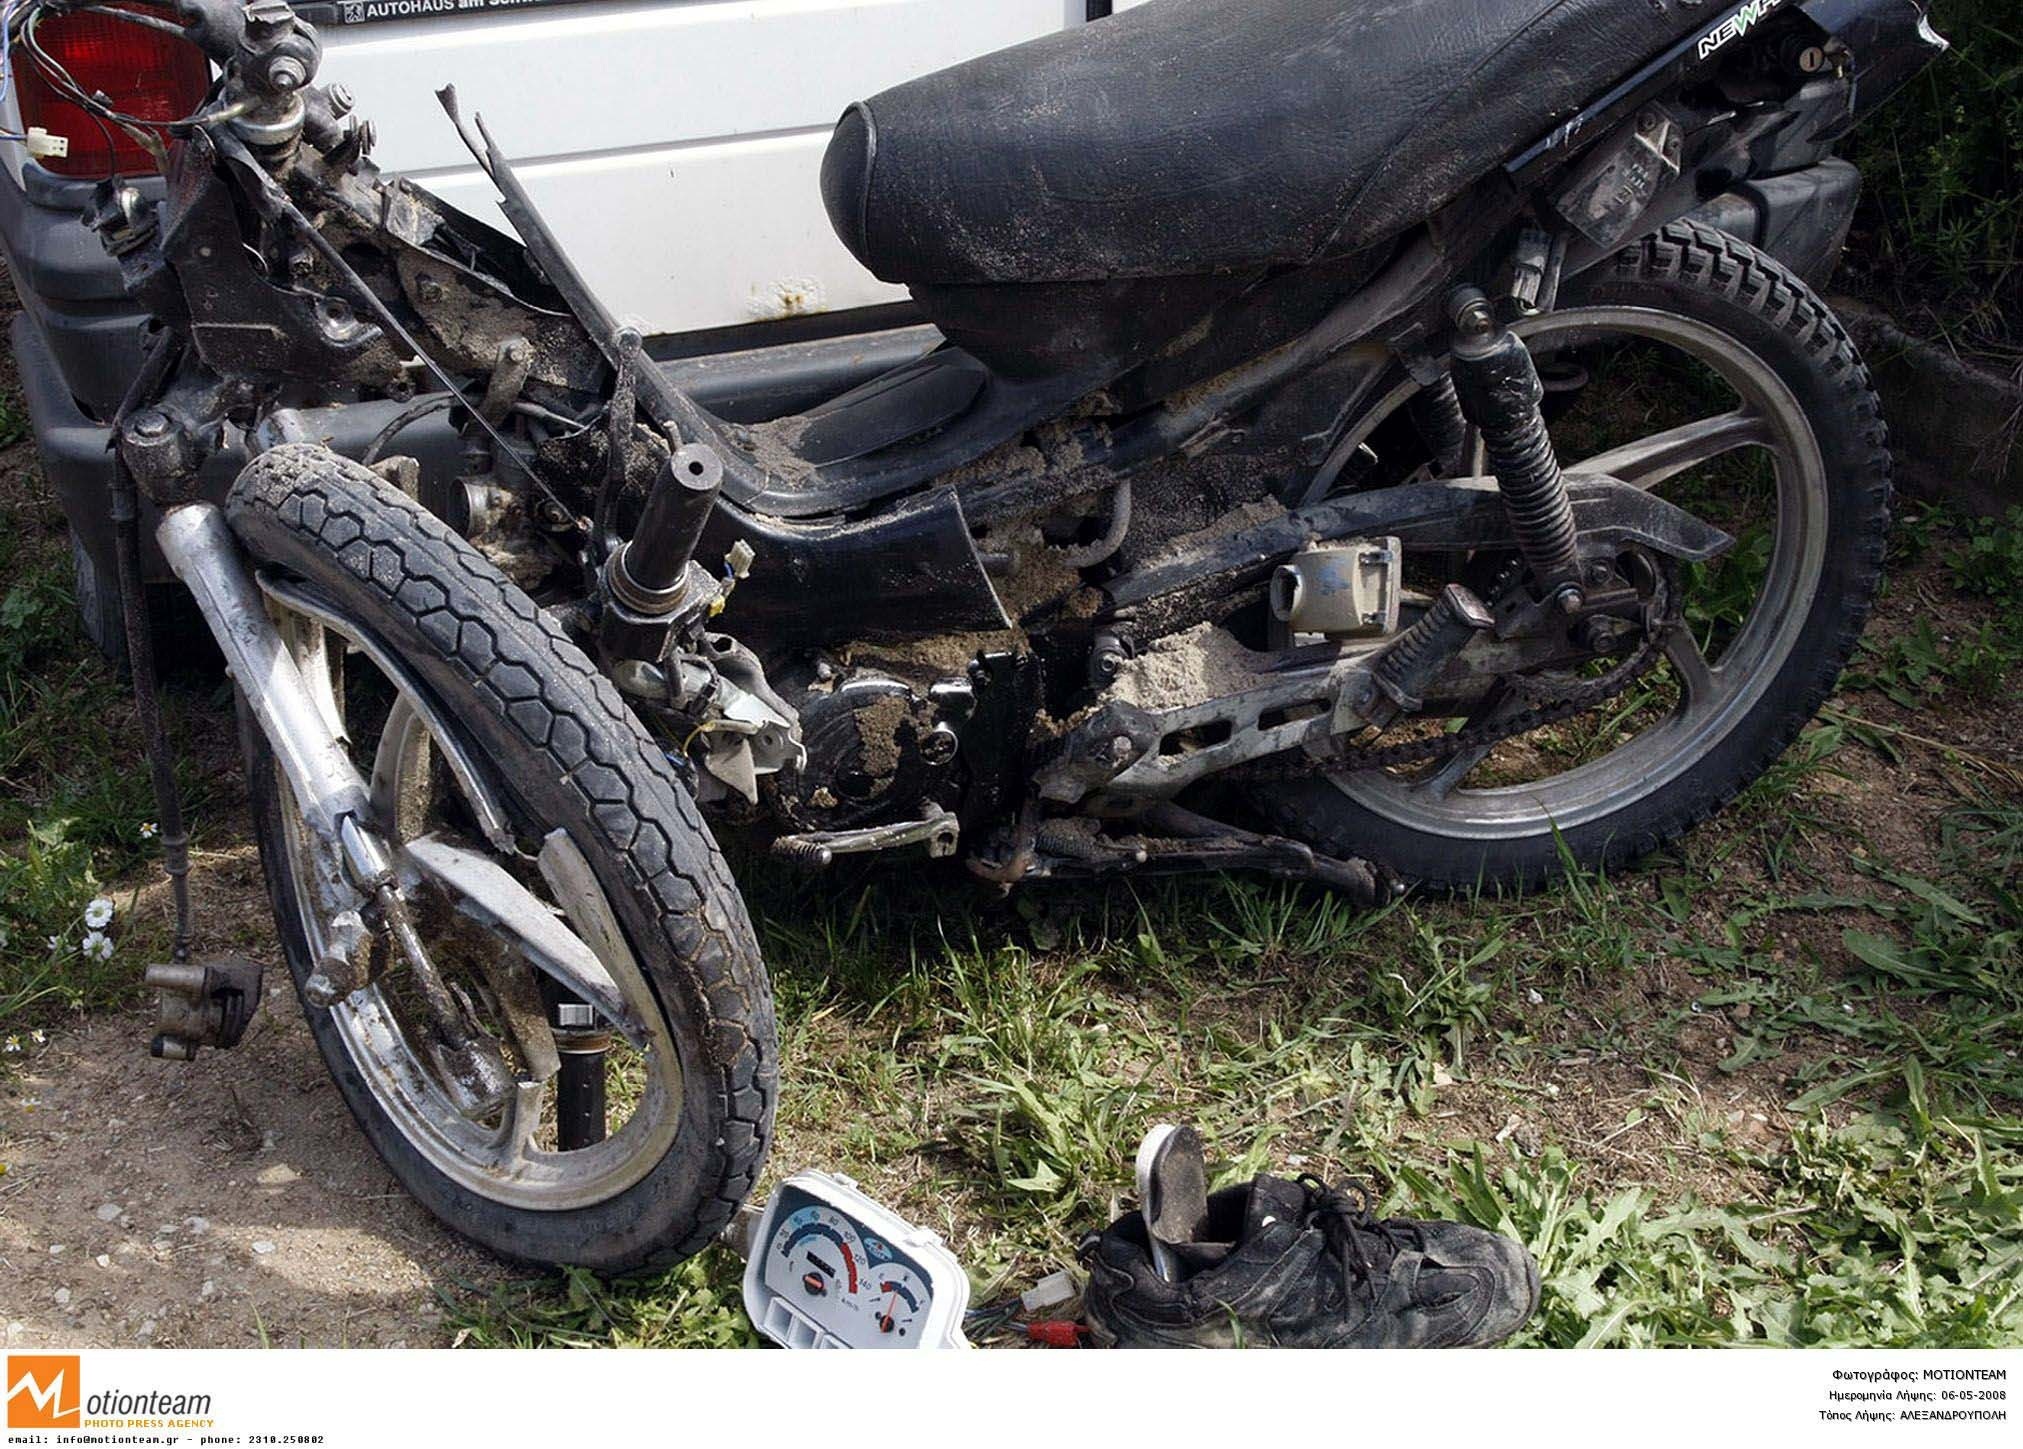 Nεκρός μοτοσικλετιστής μετά από σύγκρουση με ΙΧ